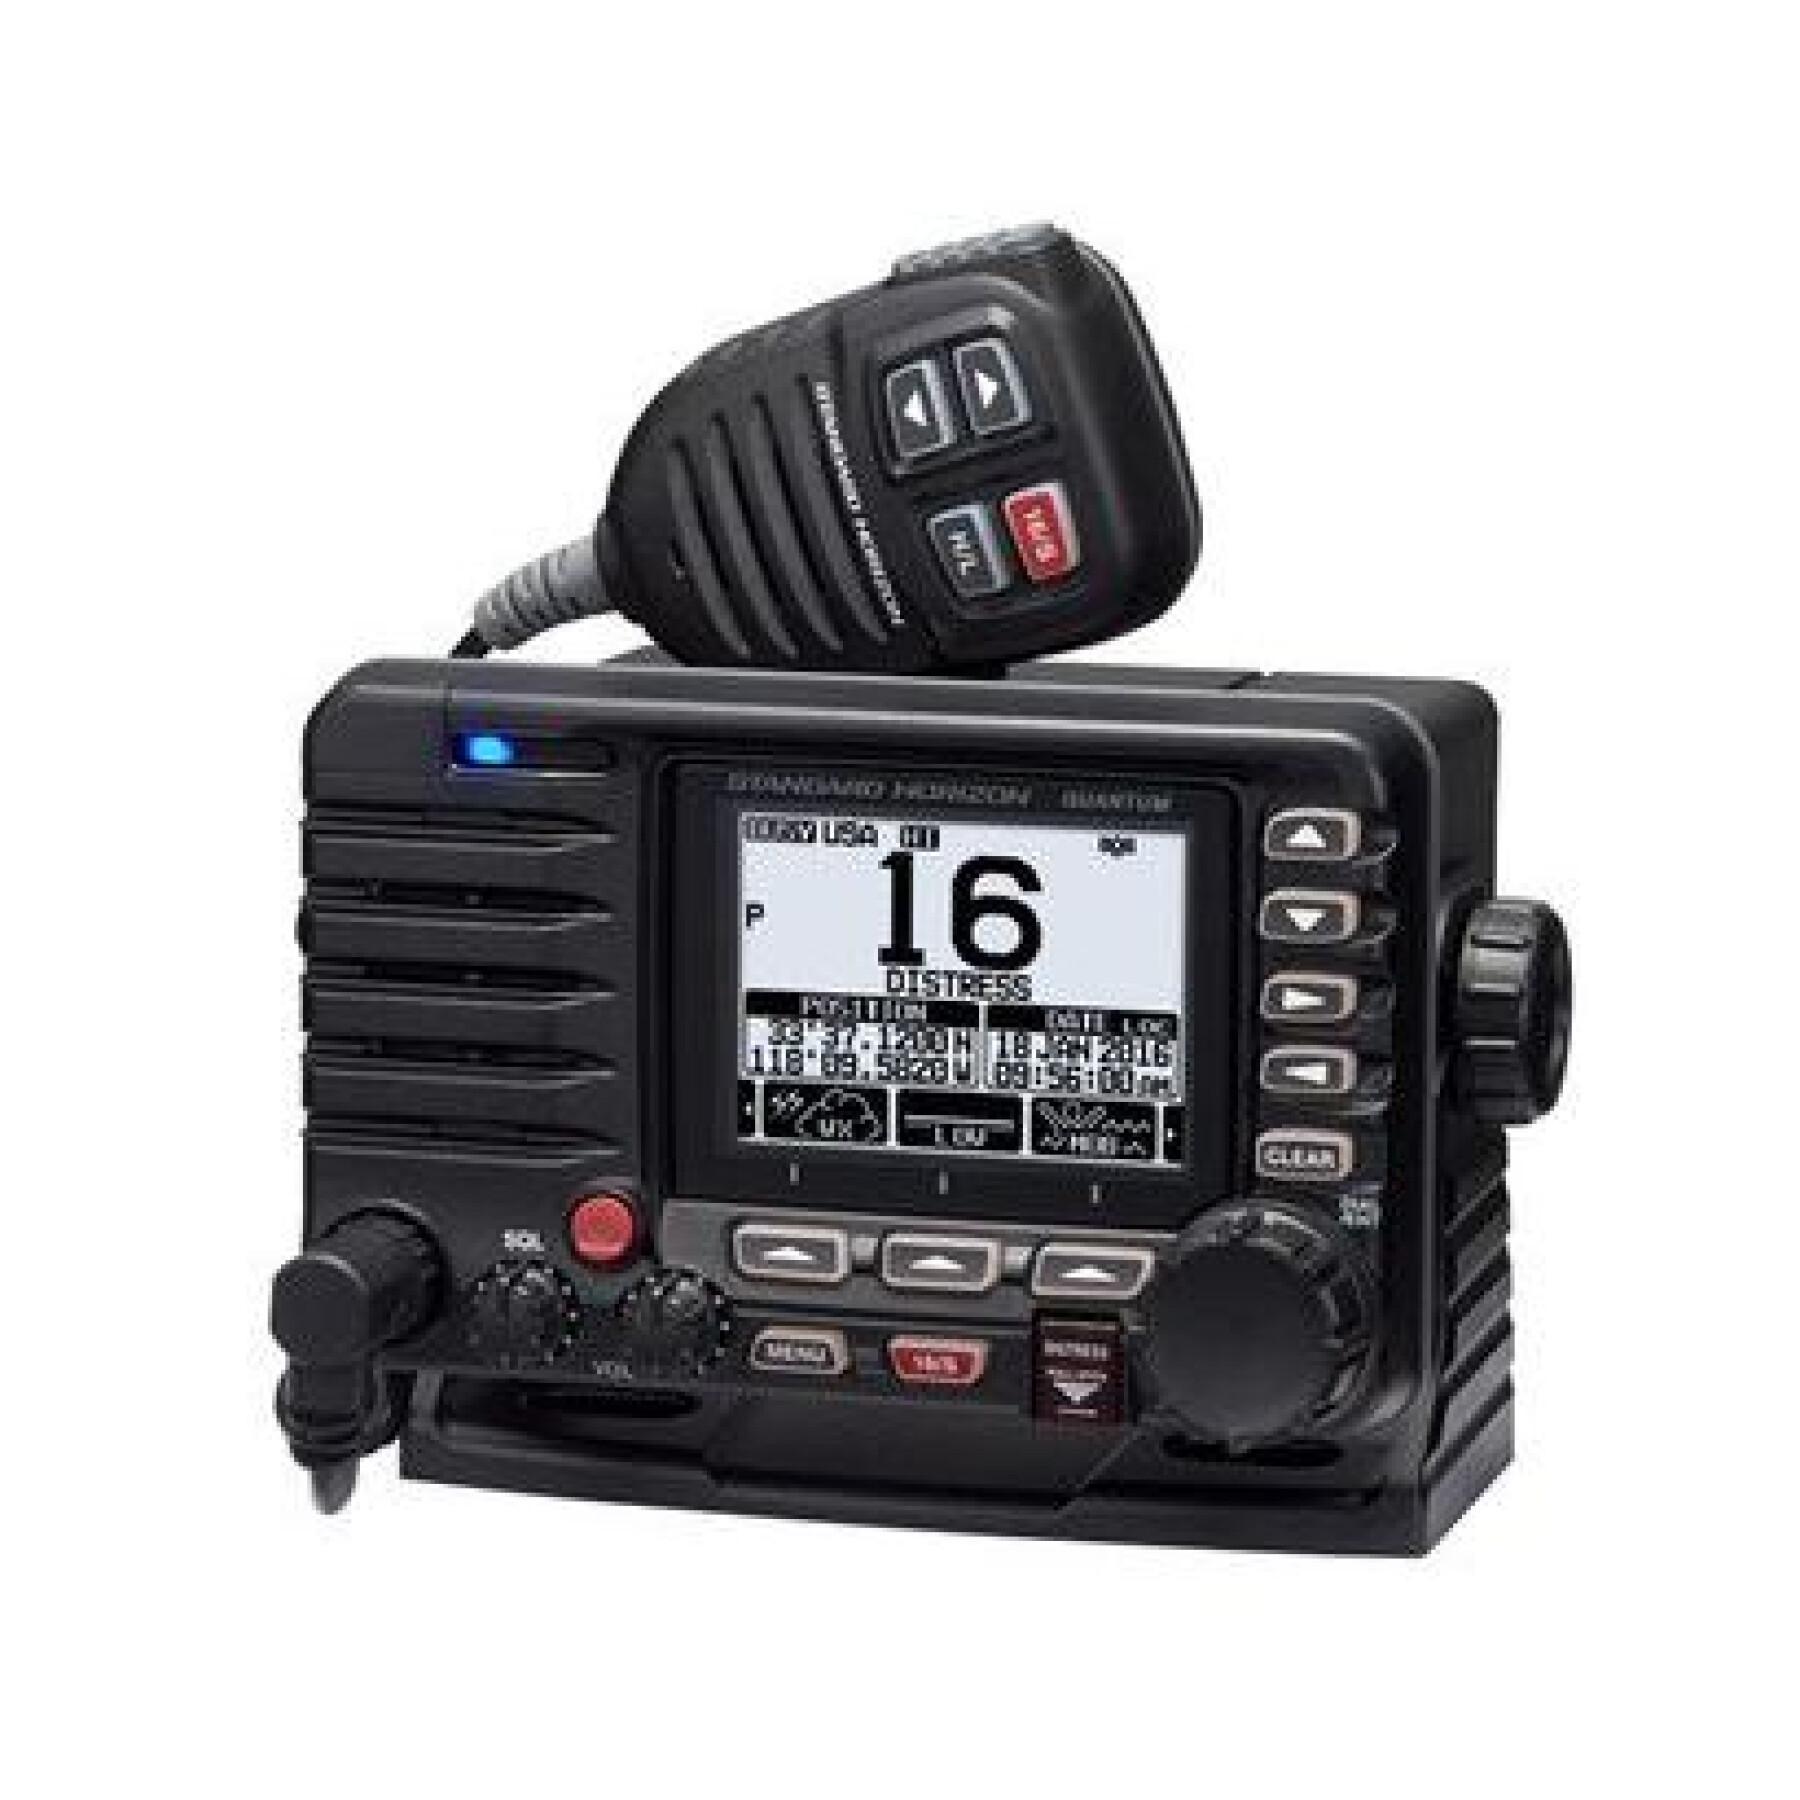 VHF fixe 25w classe d ipx8 nmea2000 avec récepteur ais intégré Standard Horizon